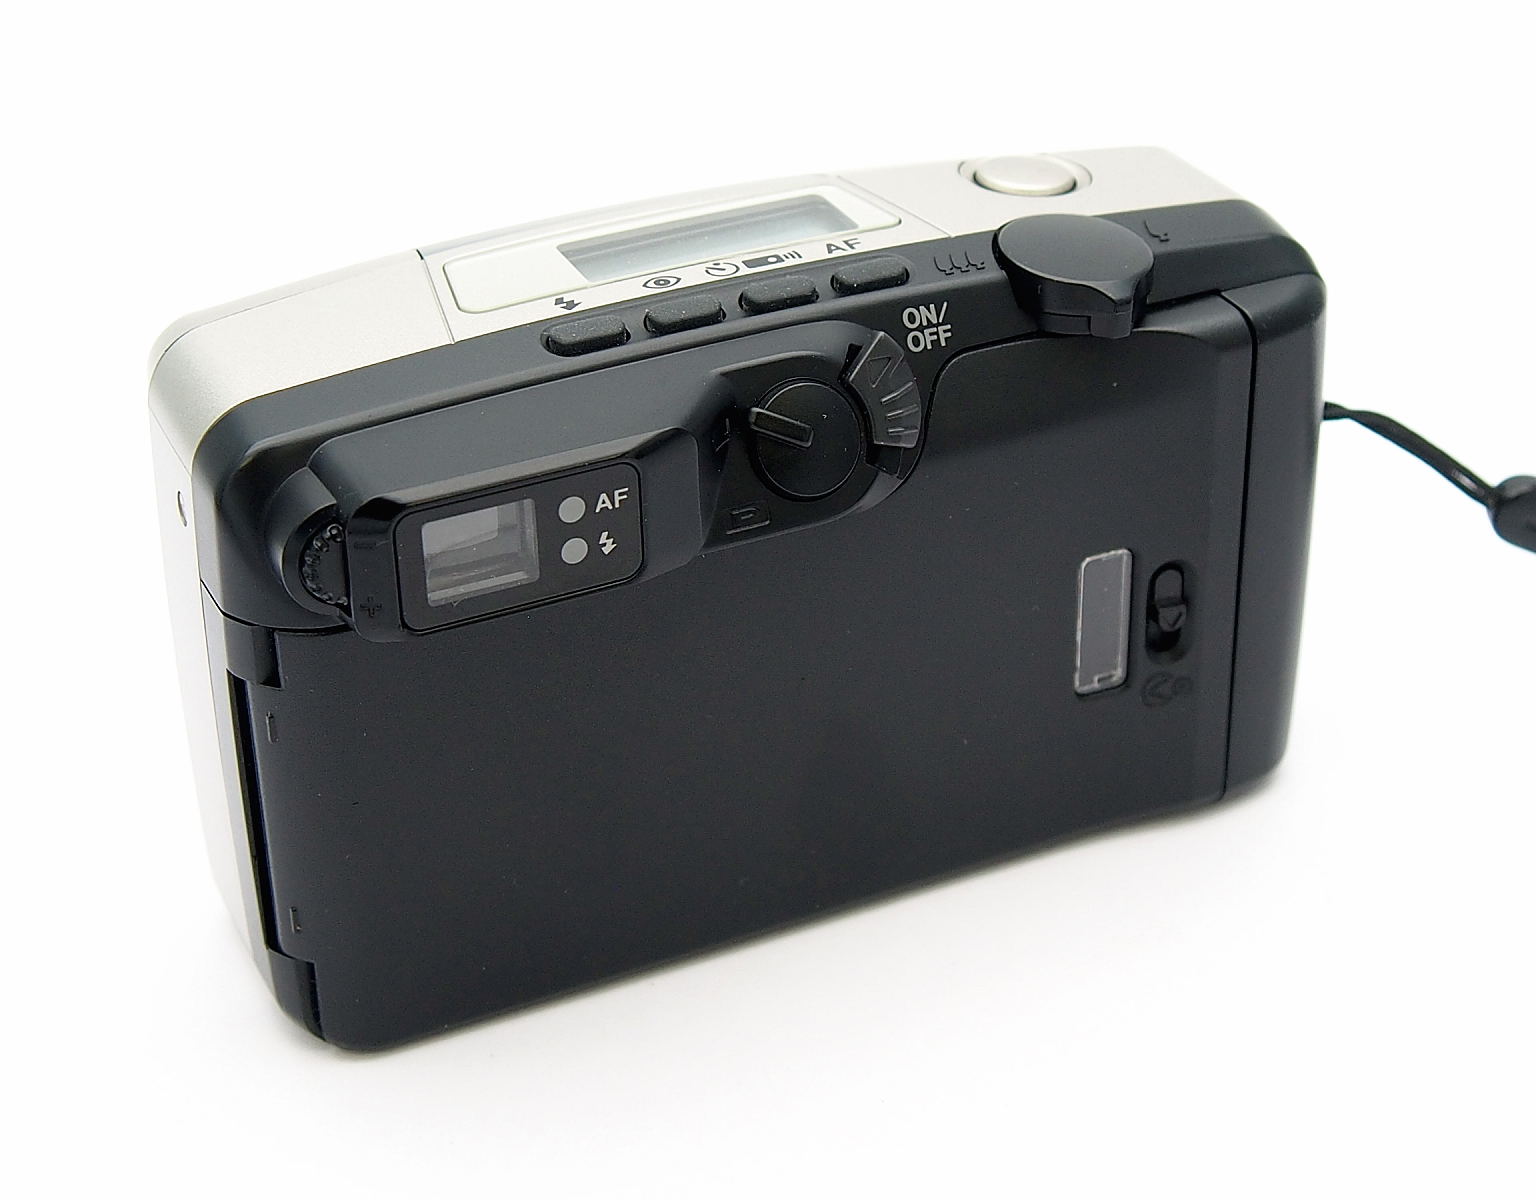 Pentax Espio 140M, 35mm Point & Shoot, Mint-, Case & Box #9700M